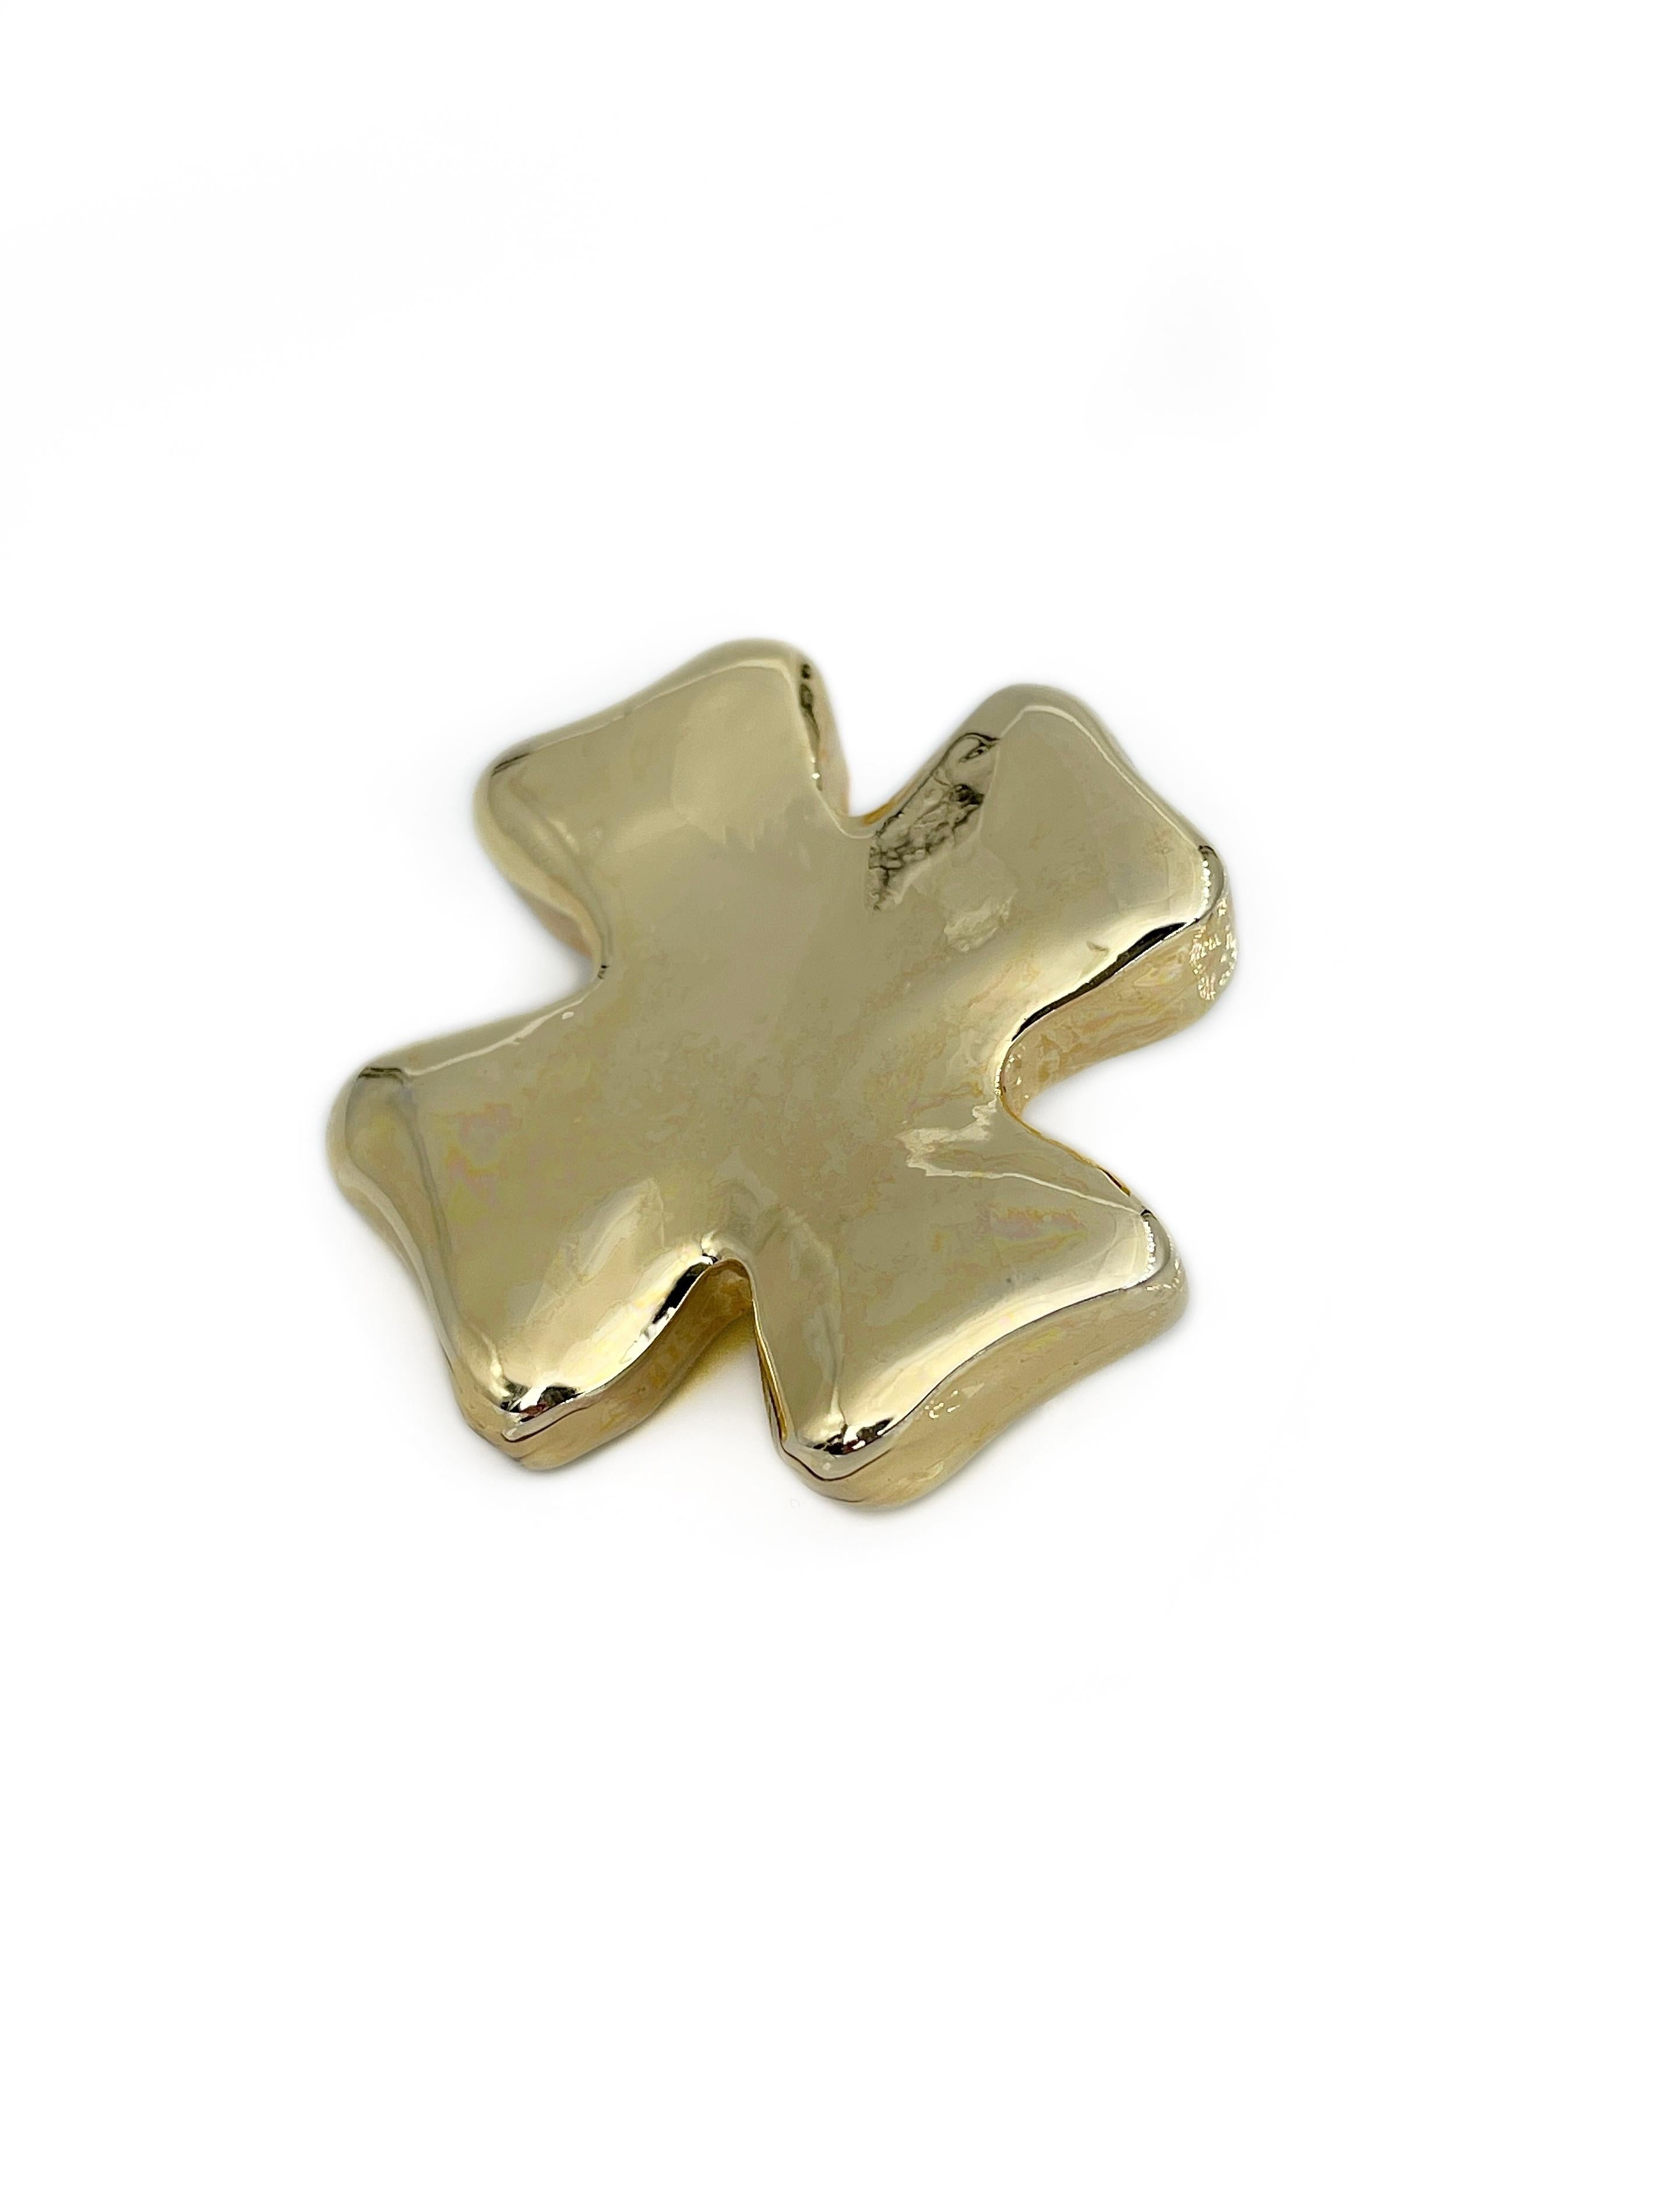 Modern 1980s Vintage Christian Lacroix Gold Tone Cross Design Pin Brooch